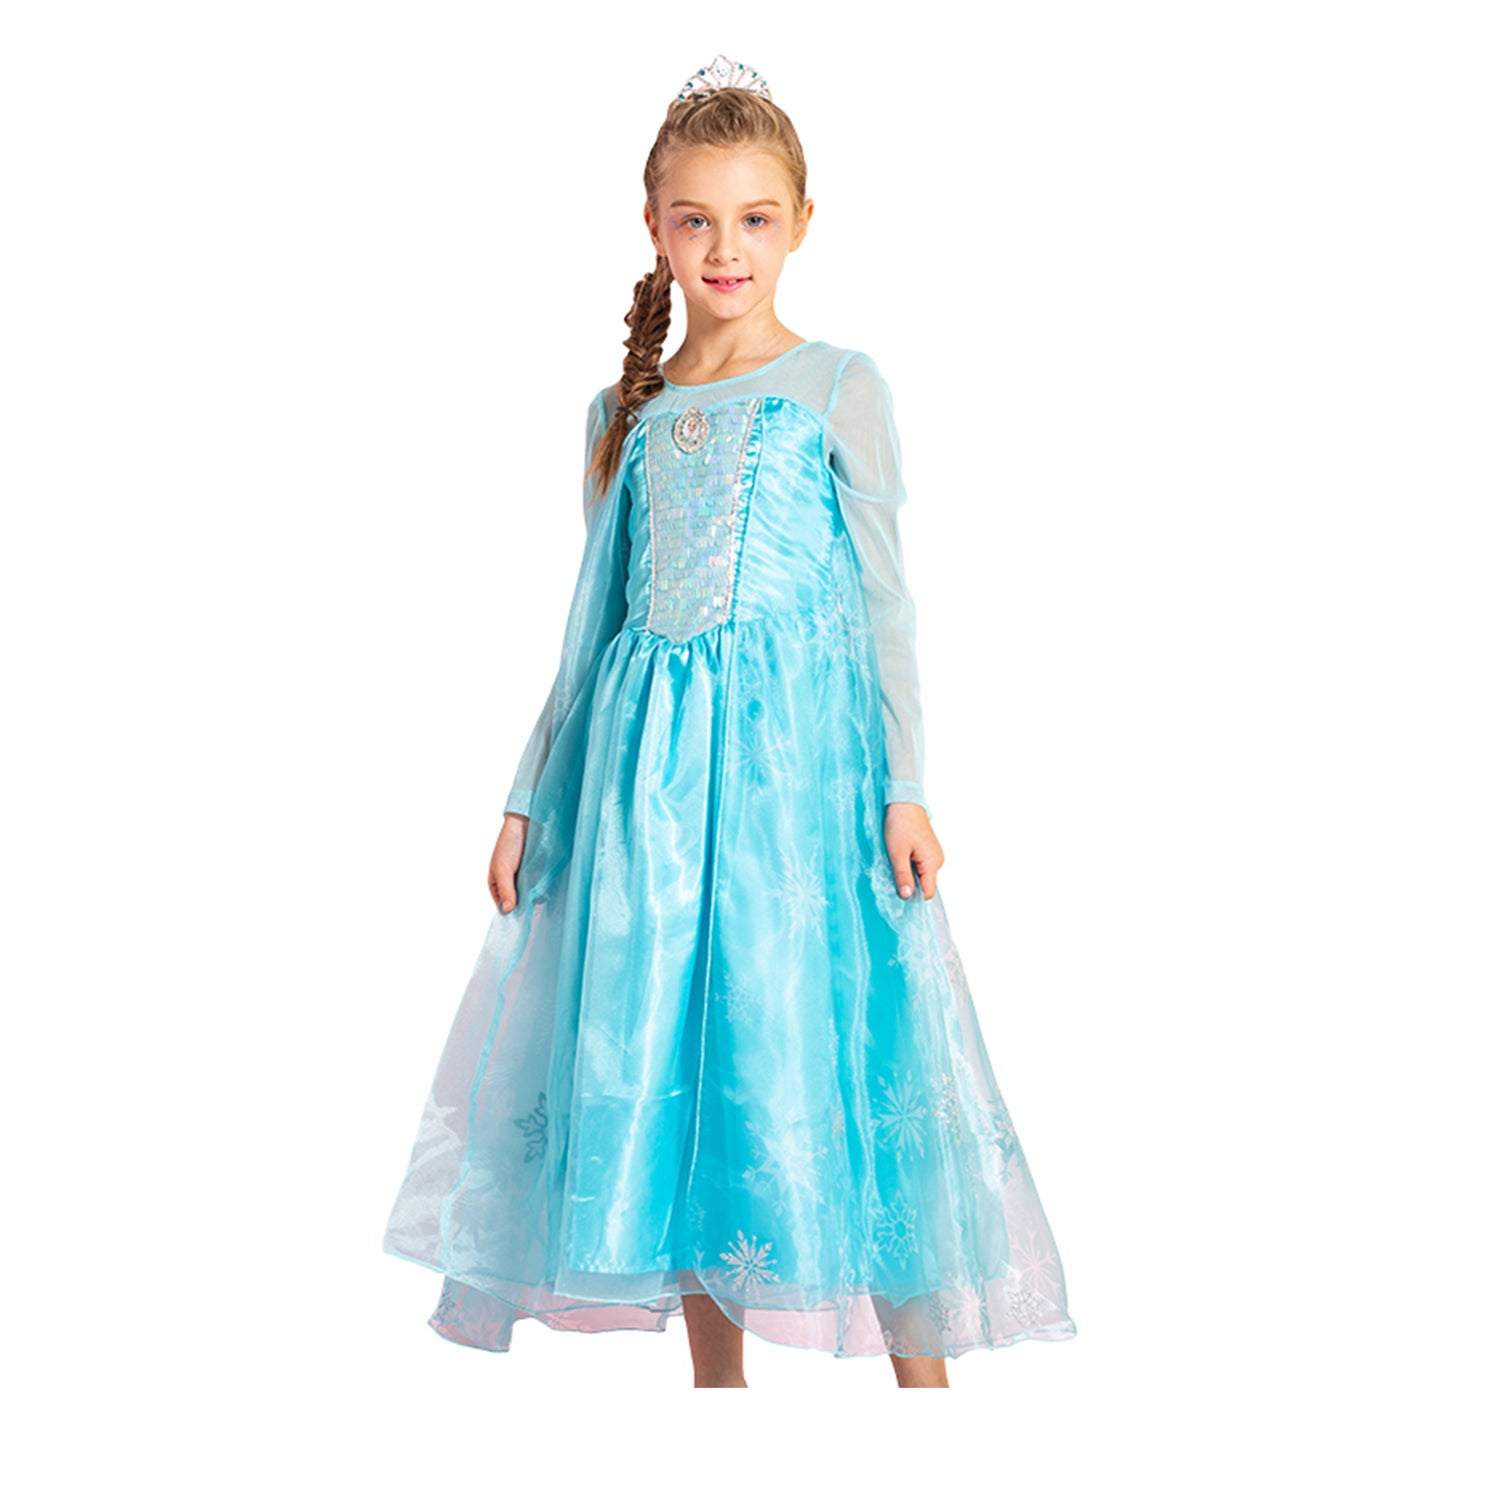 Child Elsa Prestige Dress Costume - Party Centre